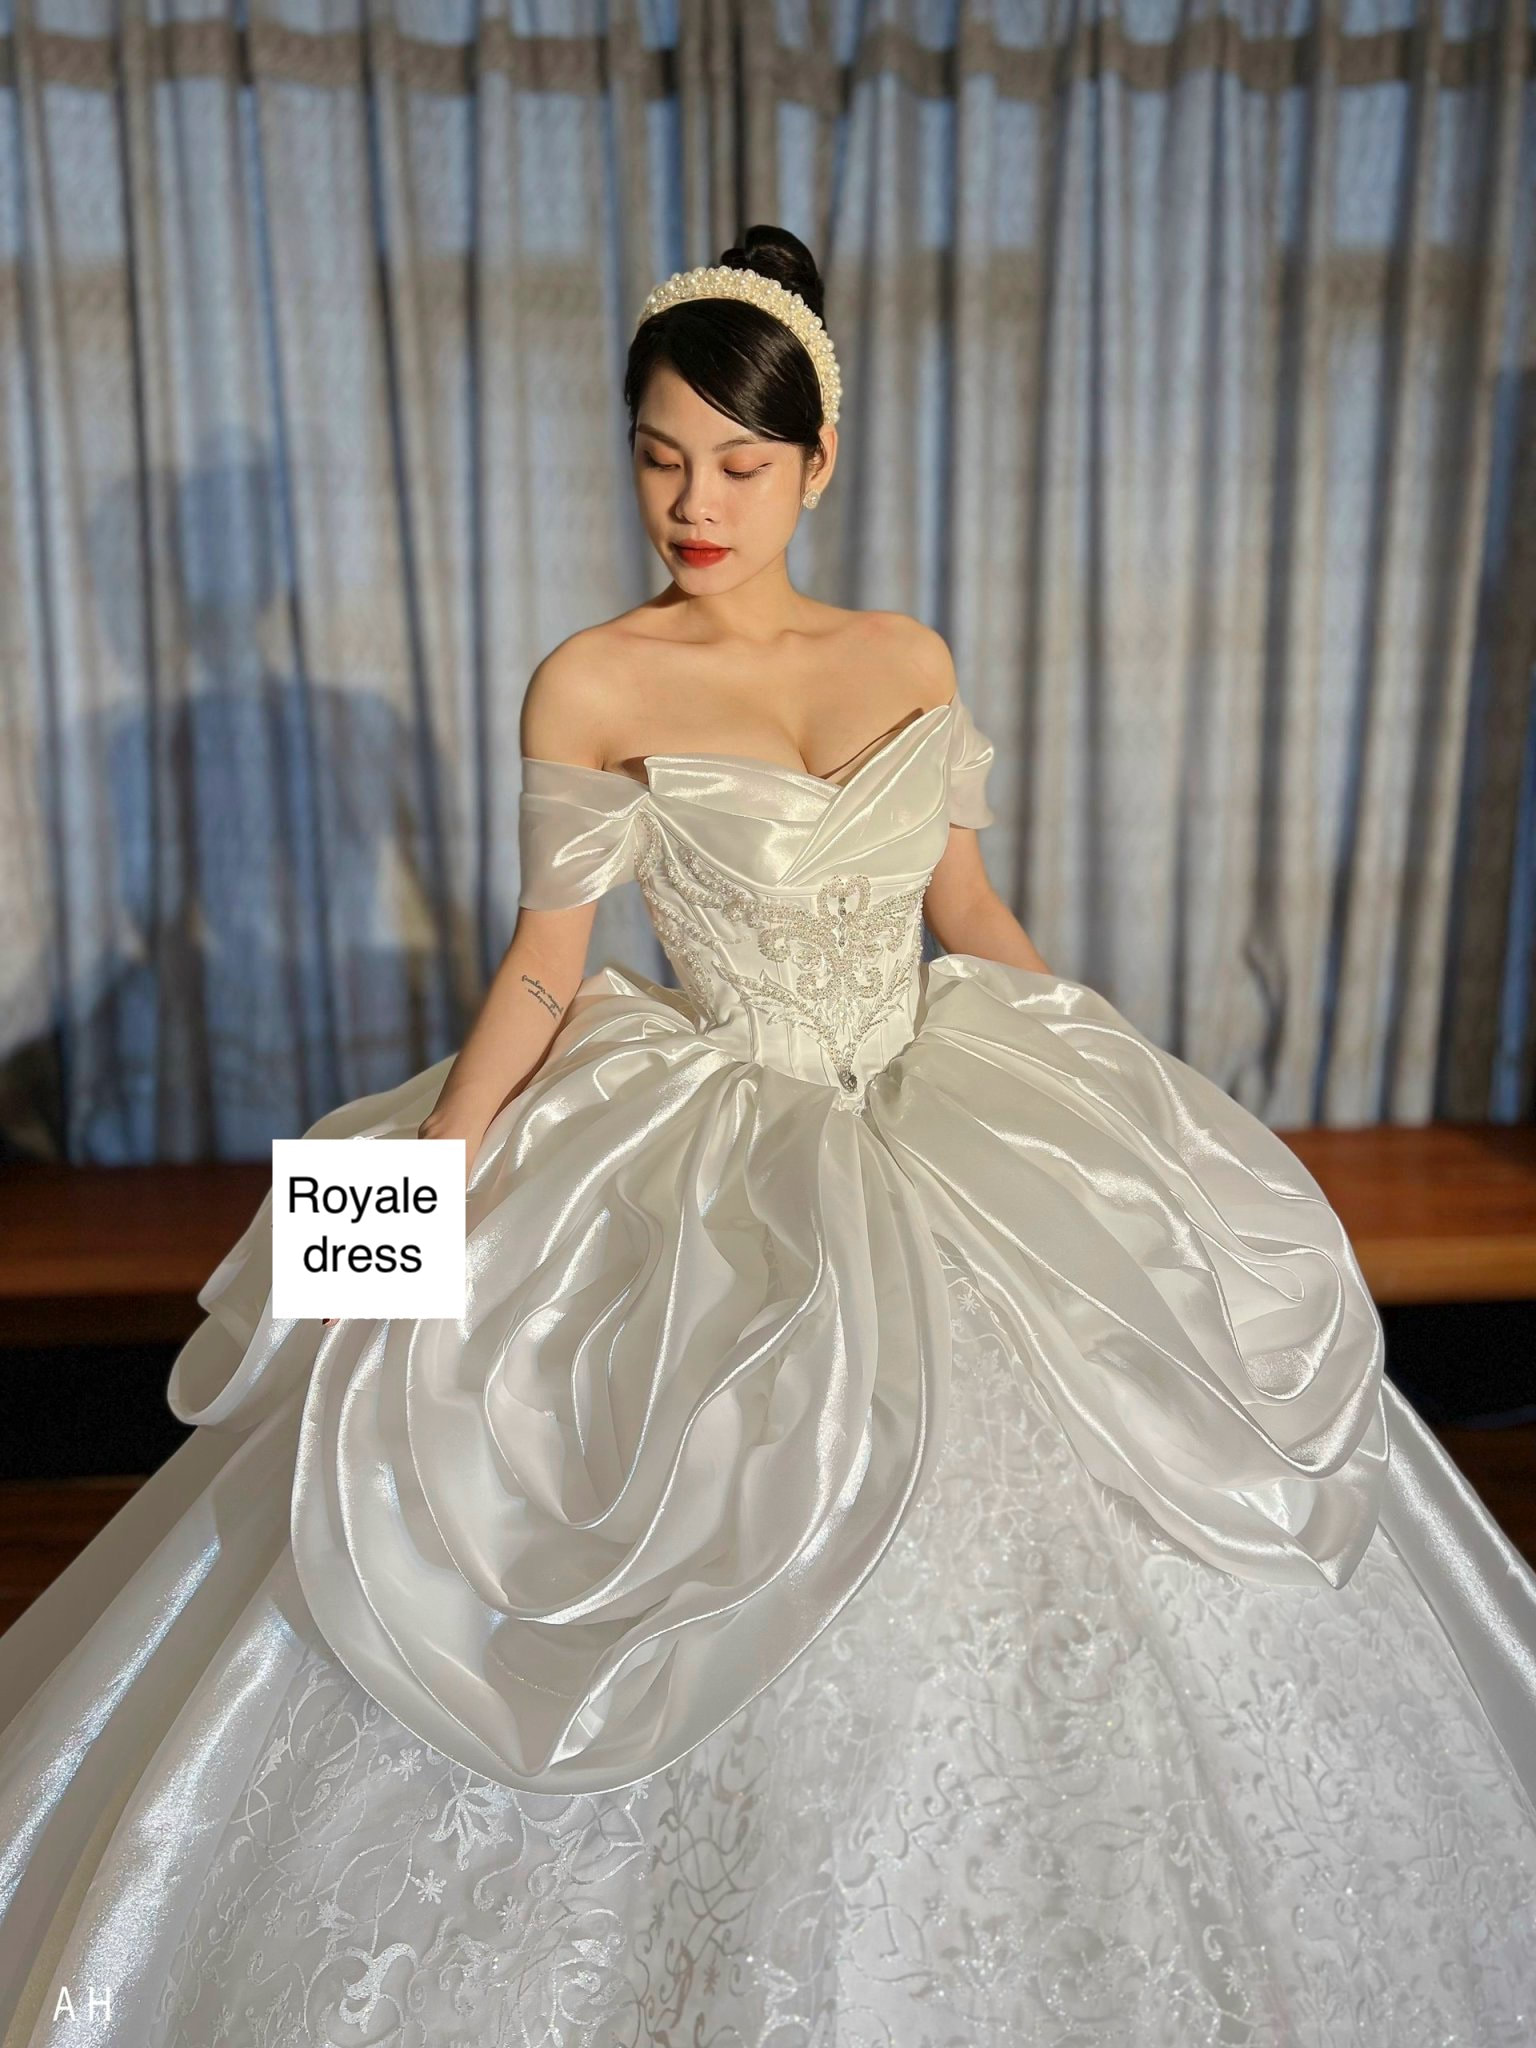 Red bridal | Panel dress, Fashion design, Formal dresses long